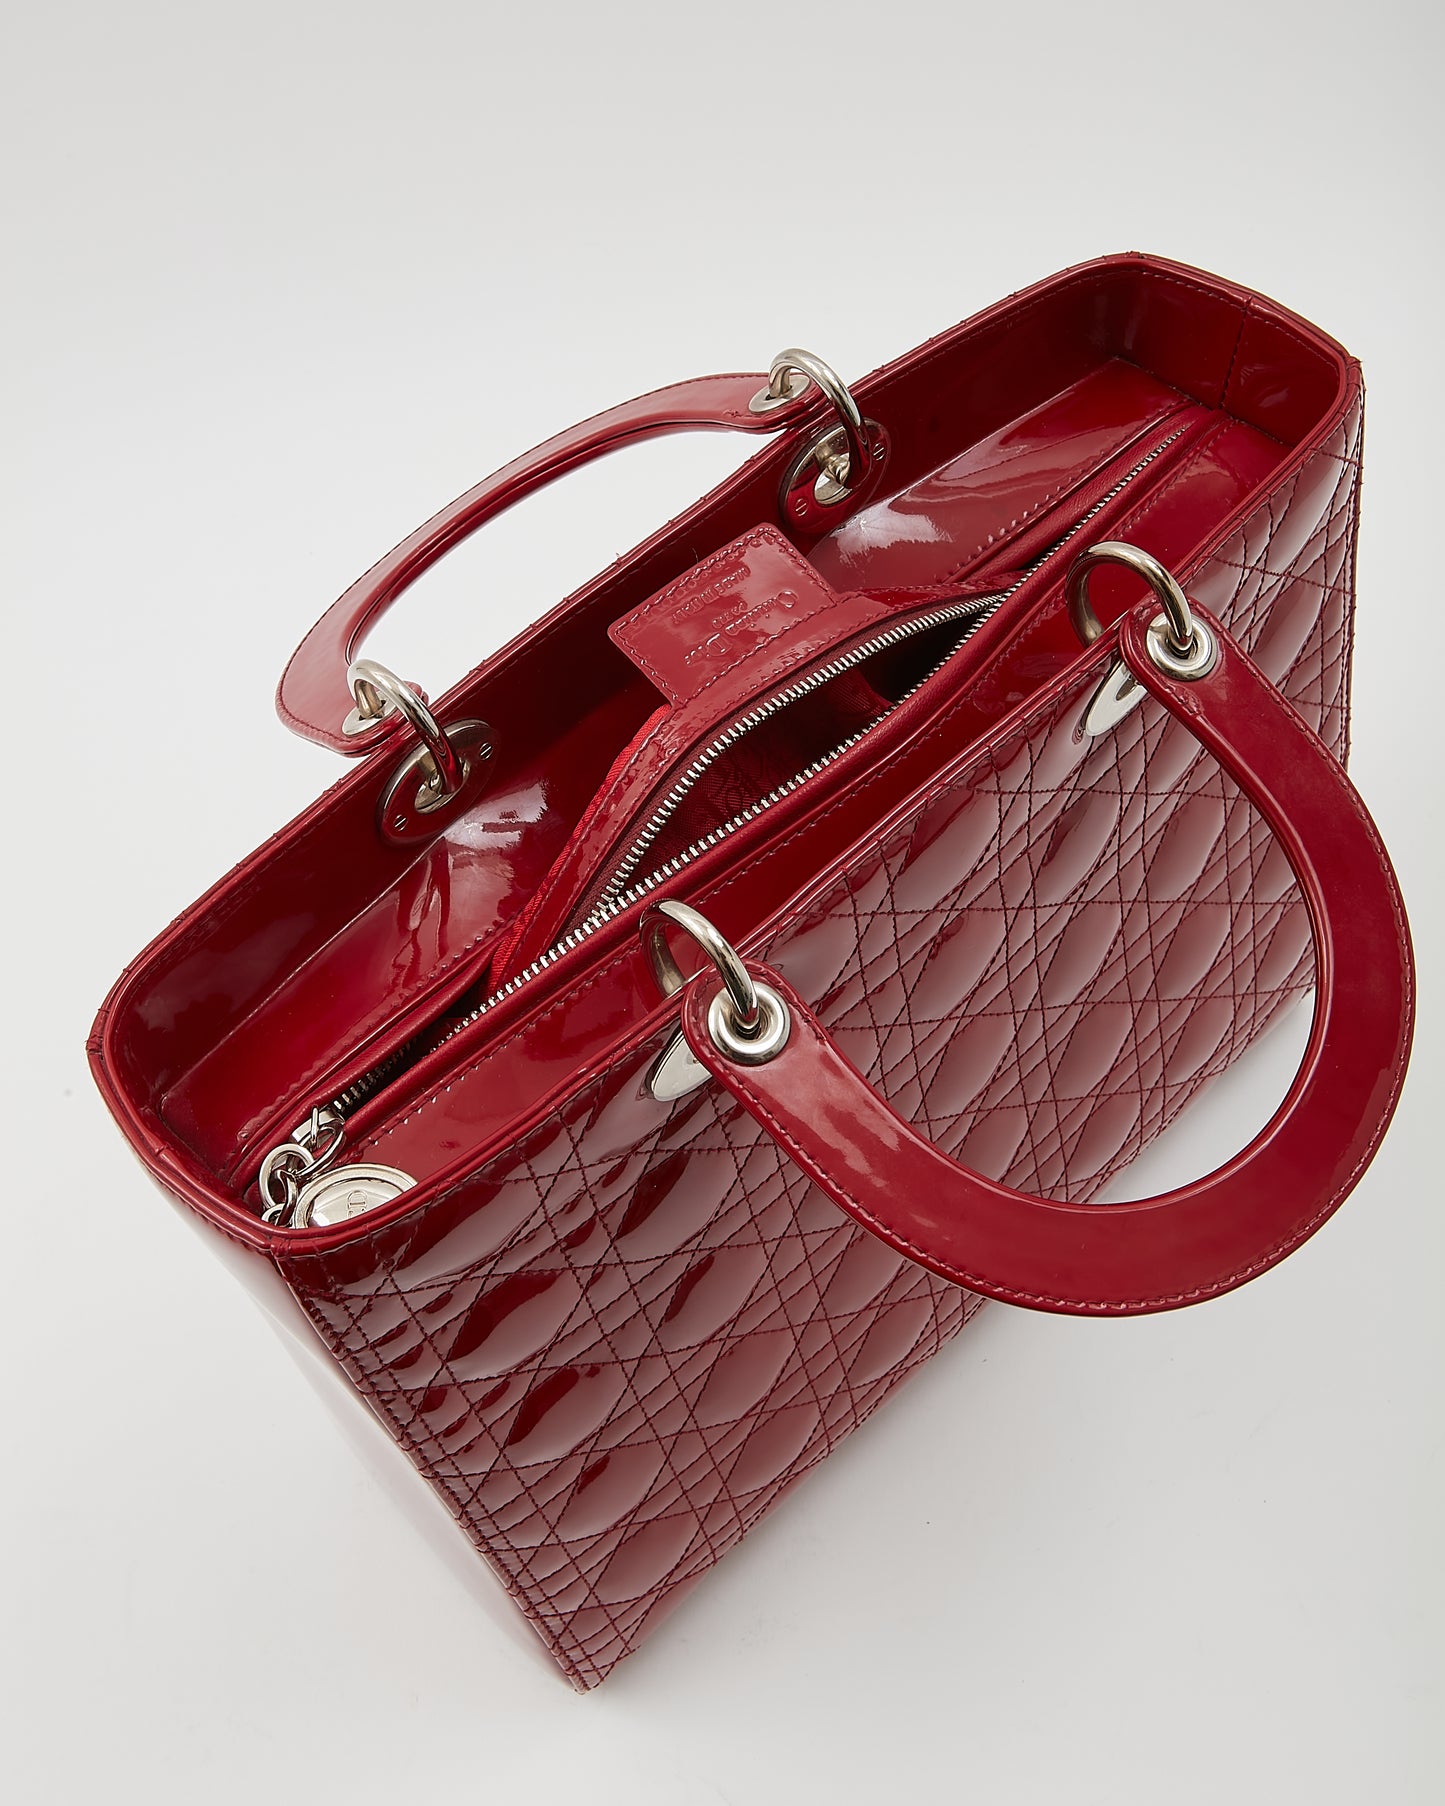 Grand sac Lady Dior Cannage verni rouge Dior